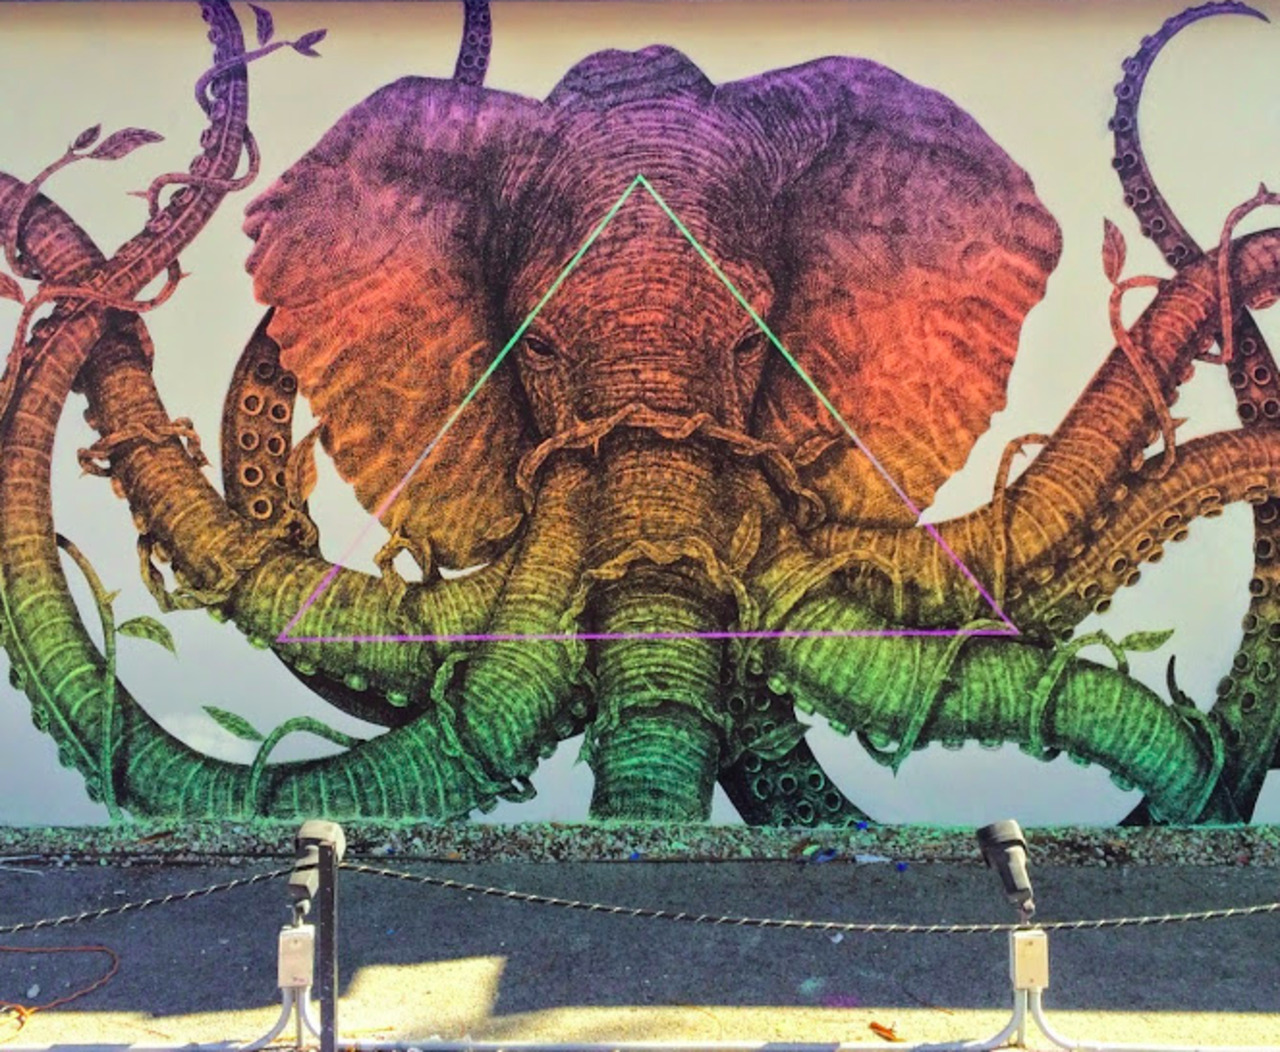 ‘Octophant.’ #Stretart in #Wynwood #Miami #Florida by Alexis Diaz #art 
https://plus.google.com/u/0/communities/110555863698582336481 http://t.co/Me1yP2hVrO